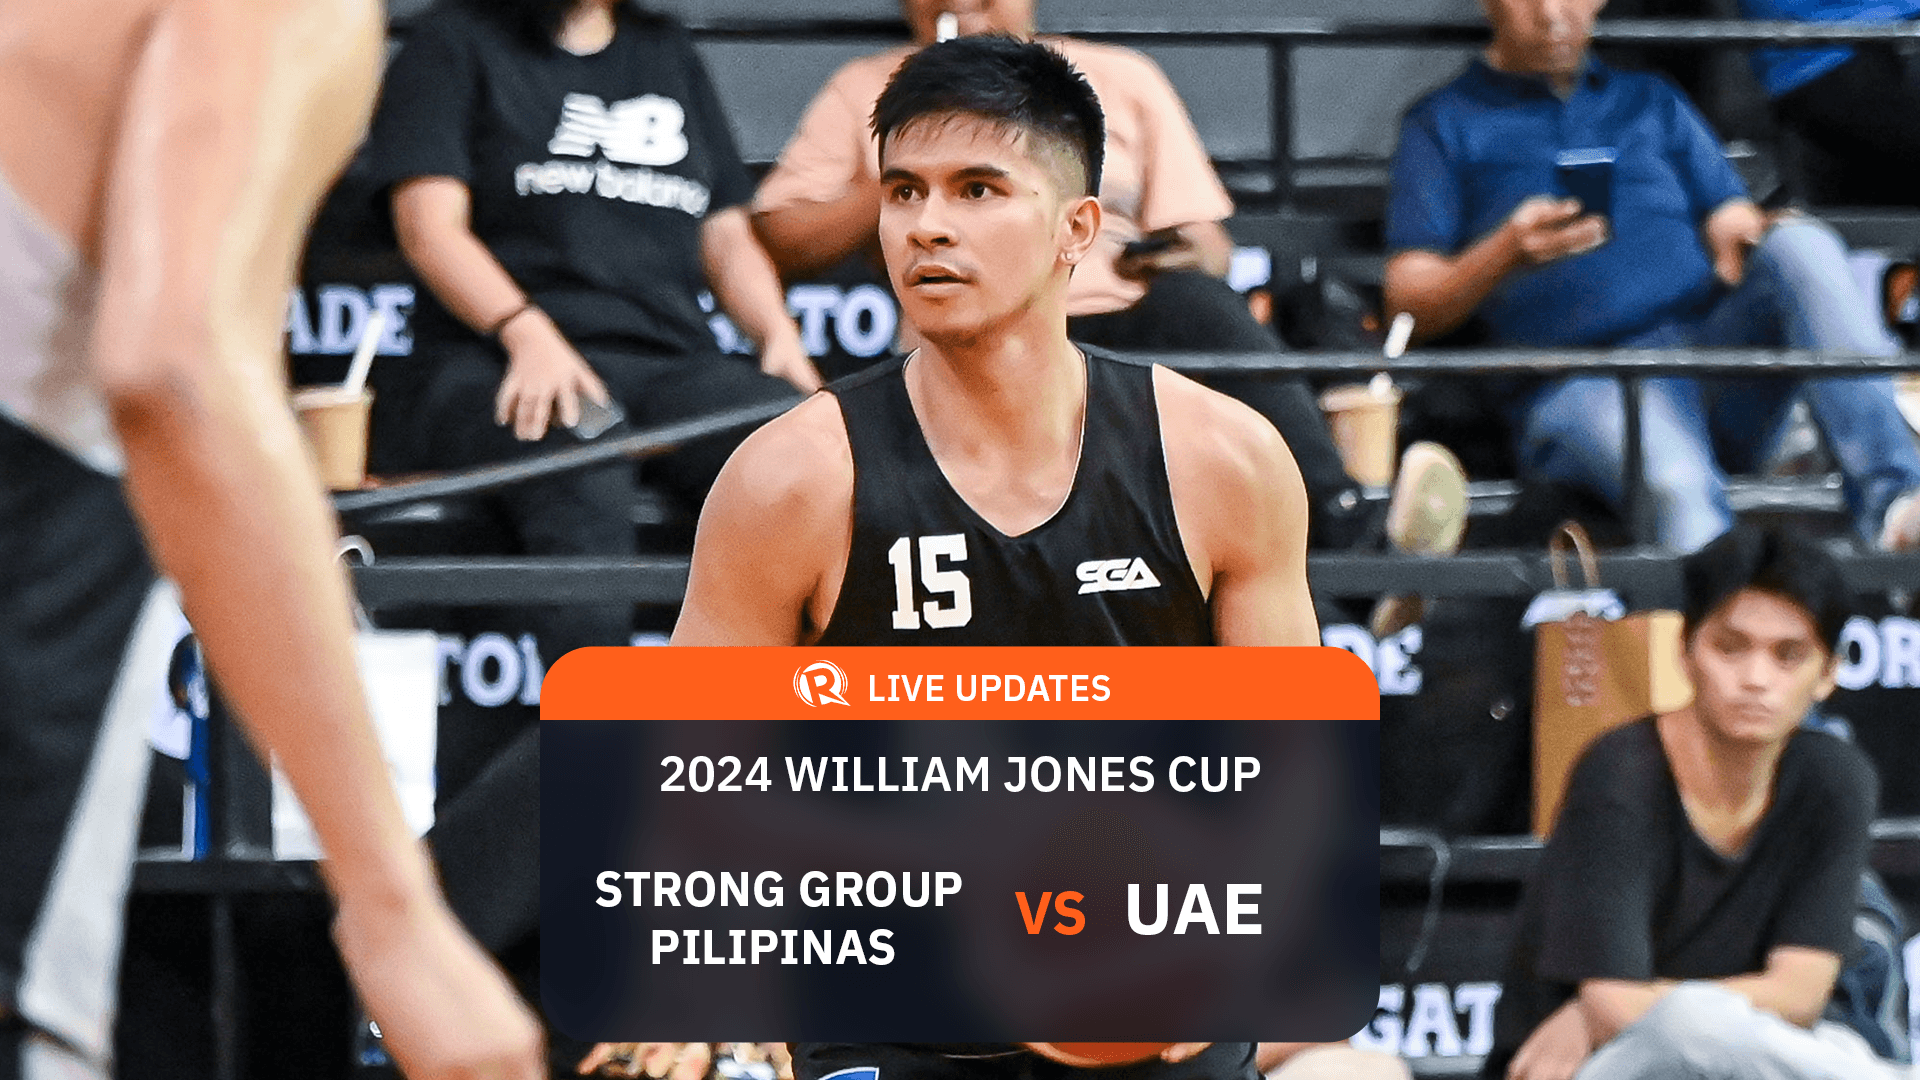 LIVE UPDATES: Philippines vs UAE – Jones Cup 2024